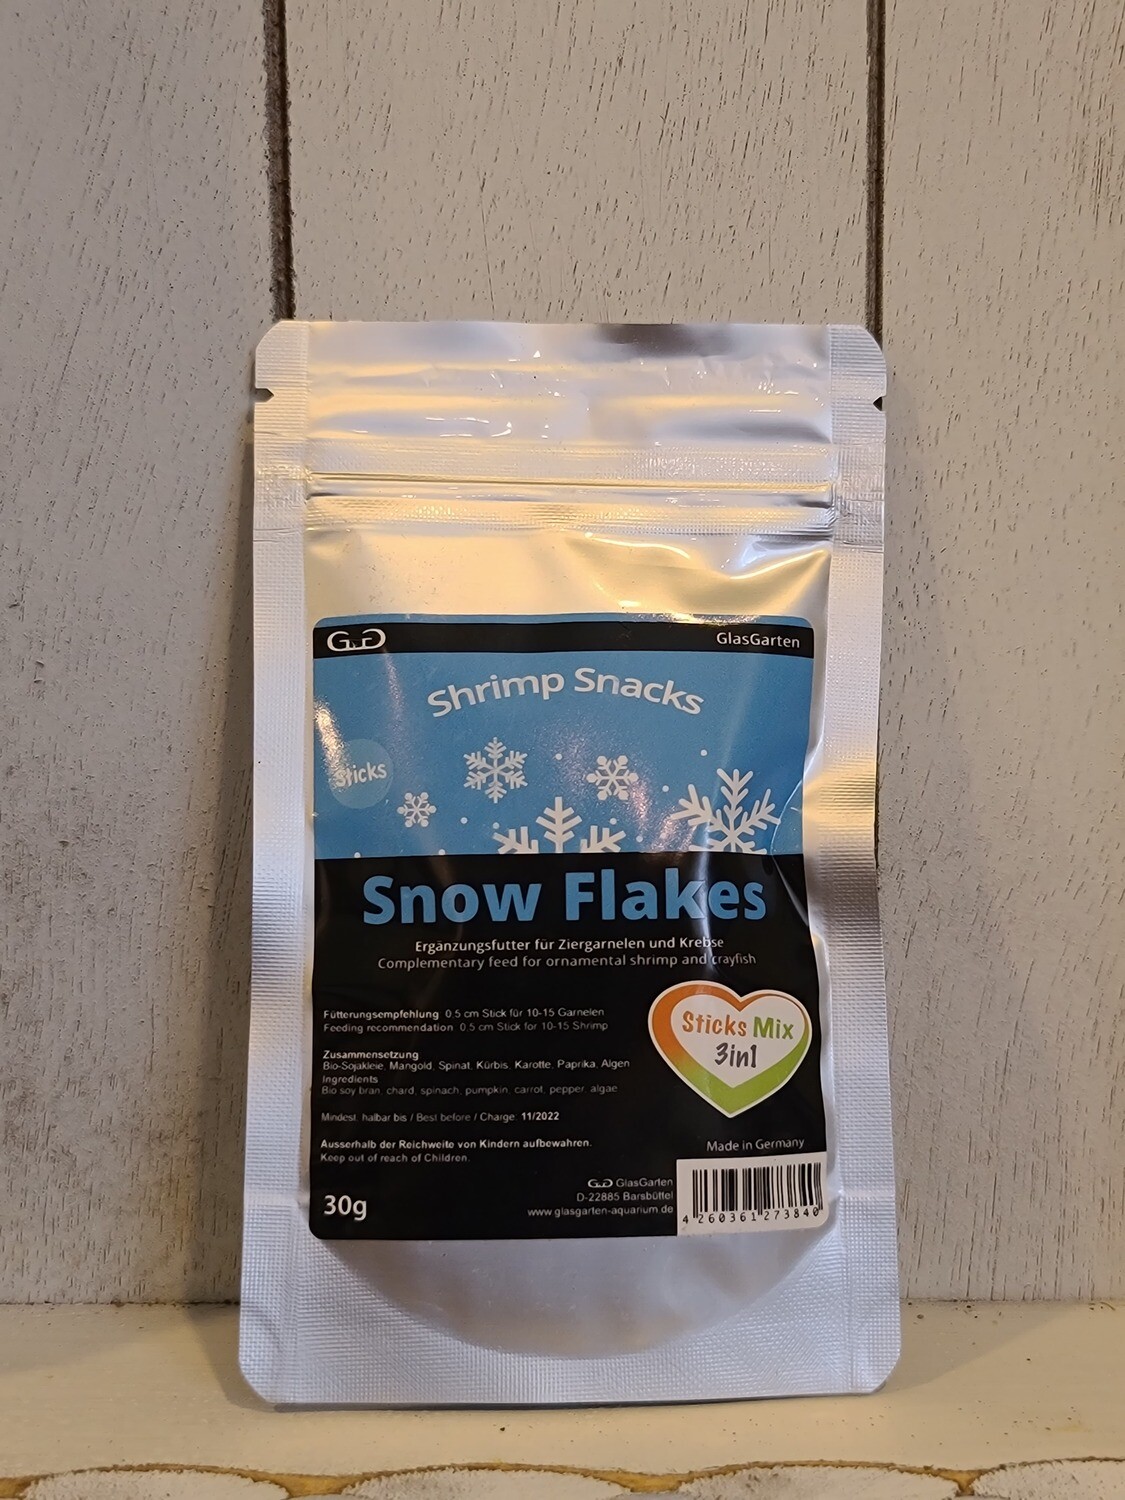 GlasGarten Snow Flakes Shrimp Snacks 3in1 - 30 gr